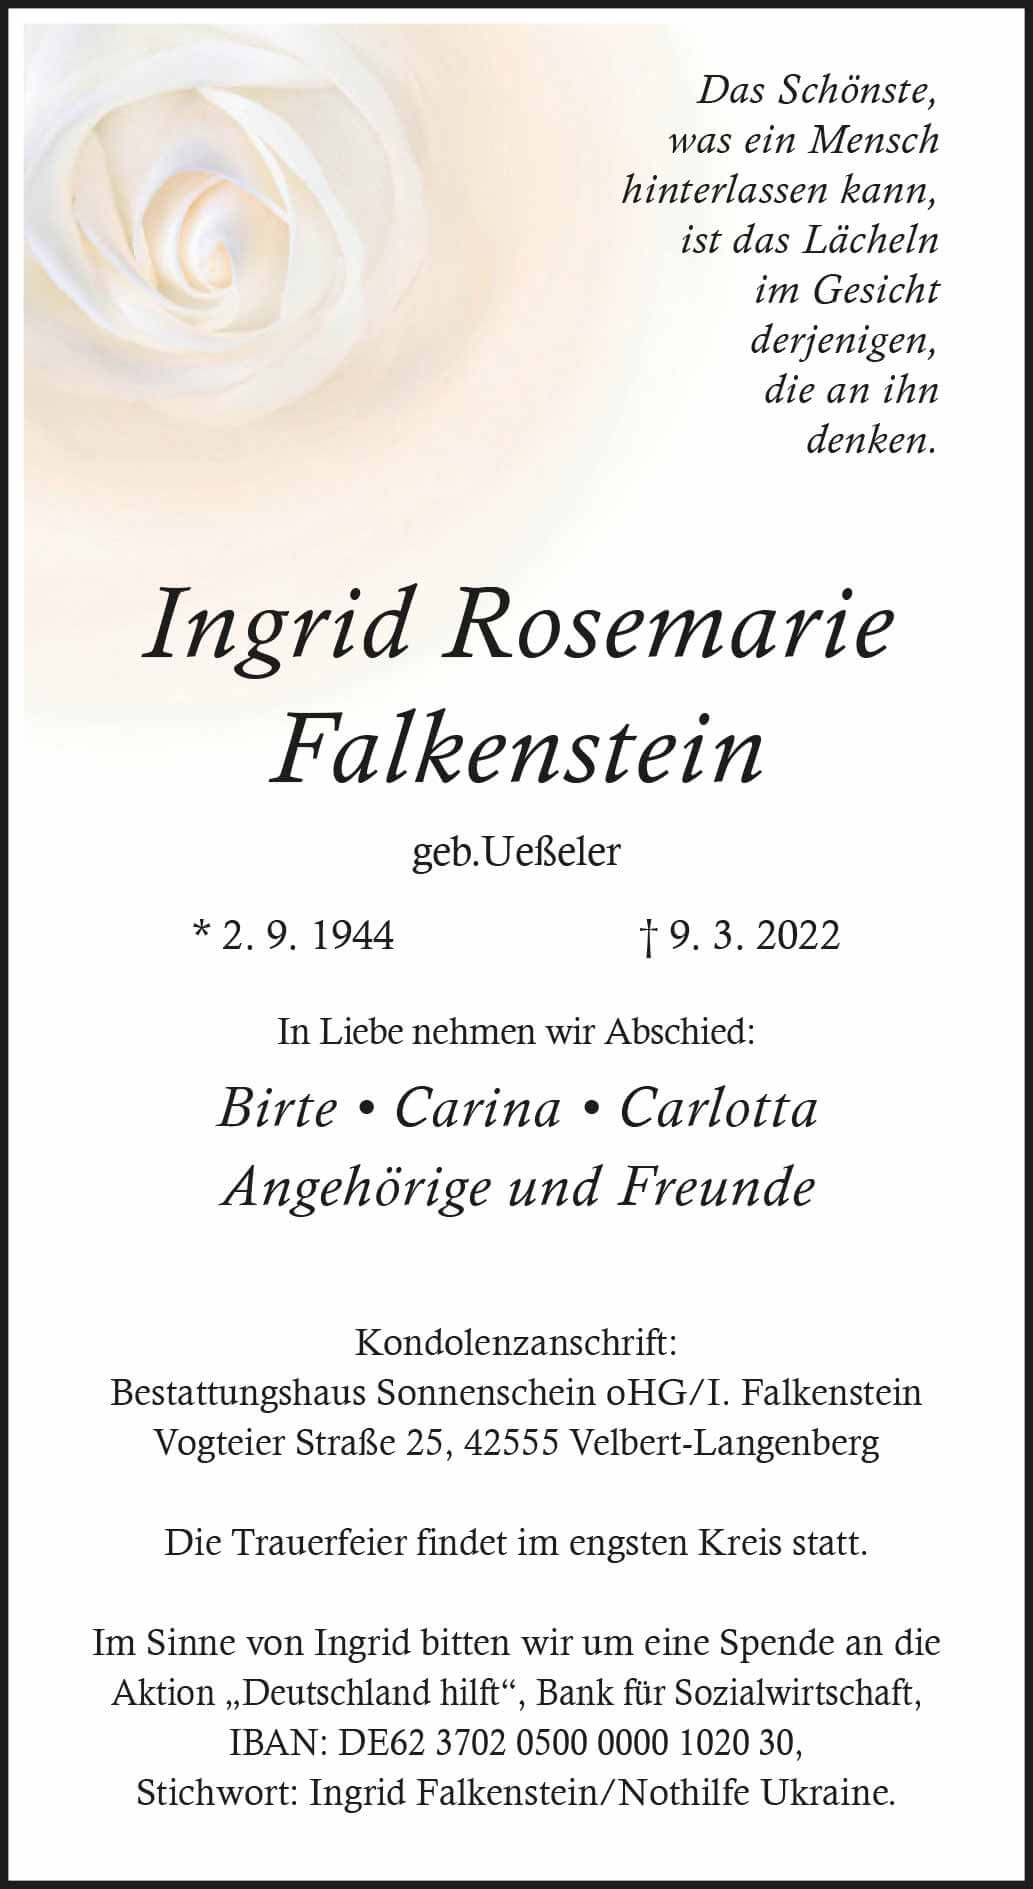 Ingrid Rosemarie Falkenstein † 9. 3. 2022